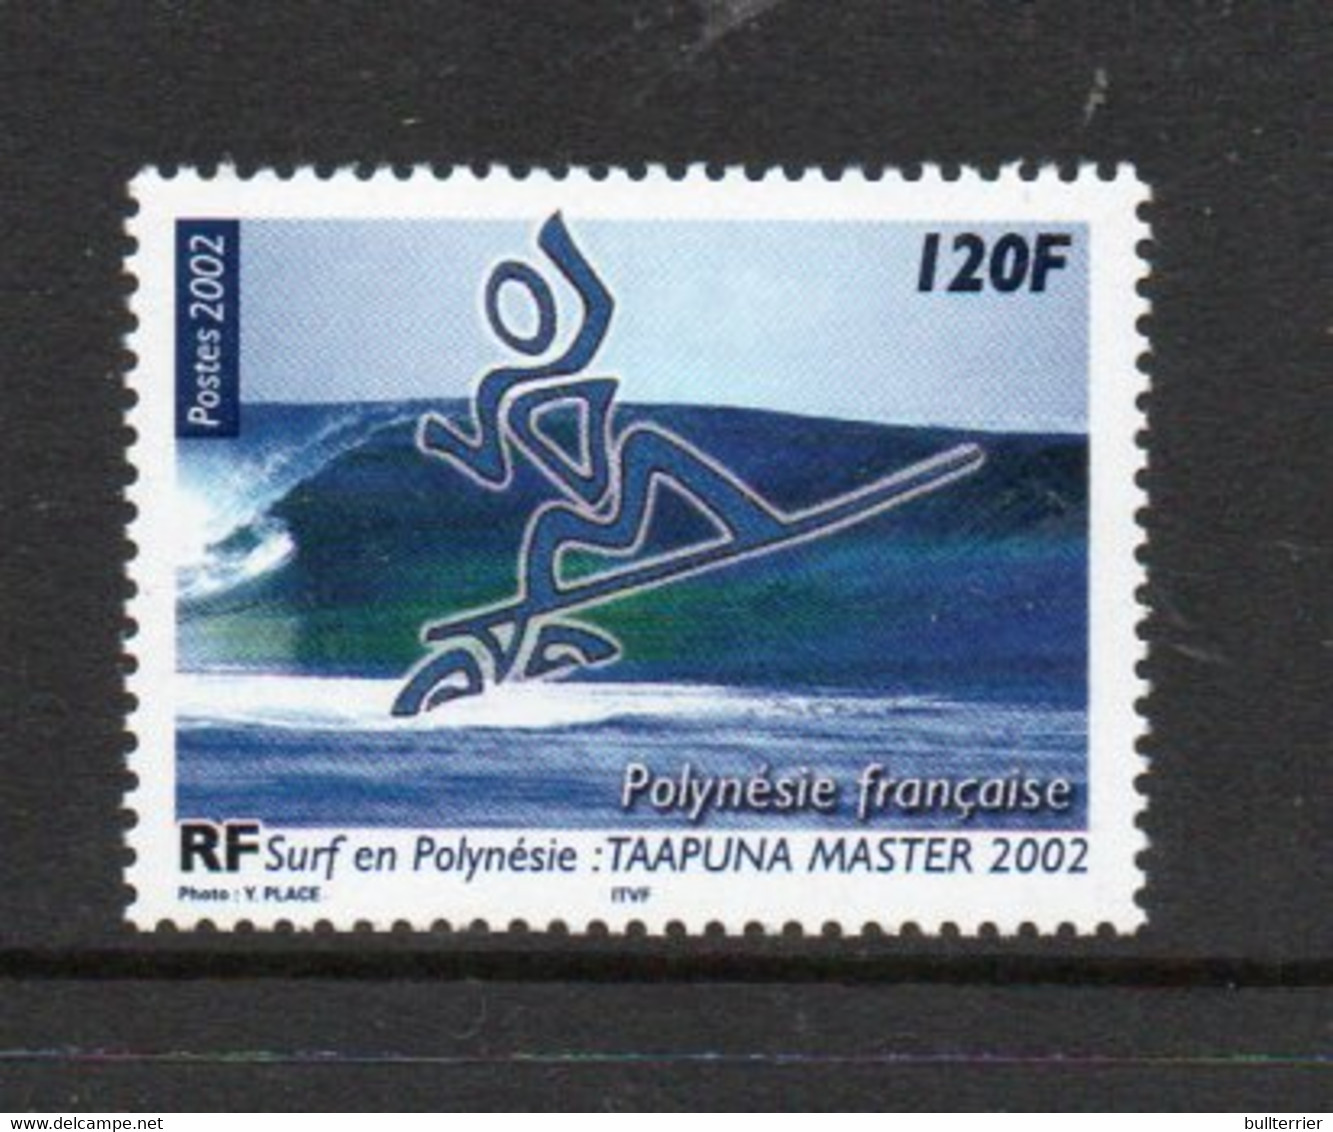 SURFING  - POLYNESIA - 2002 - SURFING  MINT NEVER HINGED - Ski Náutico